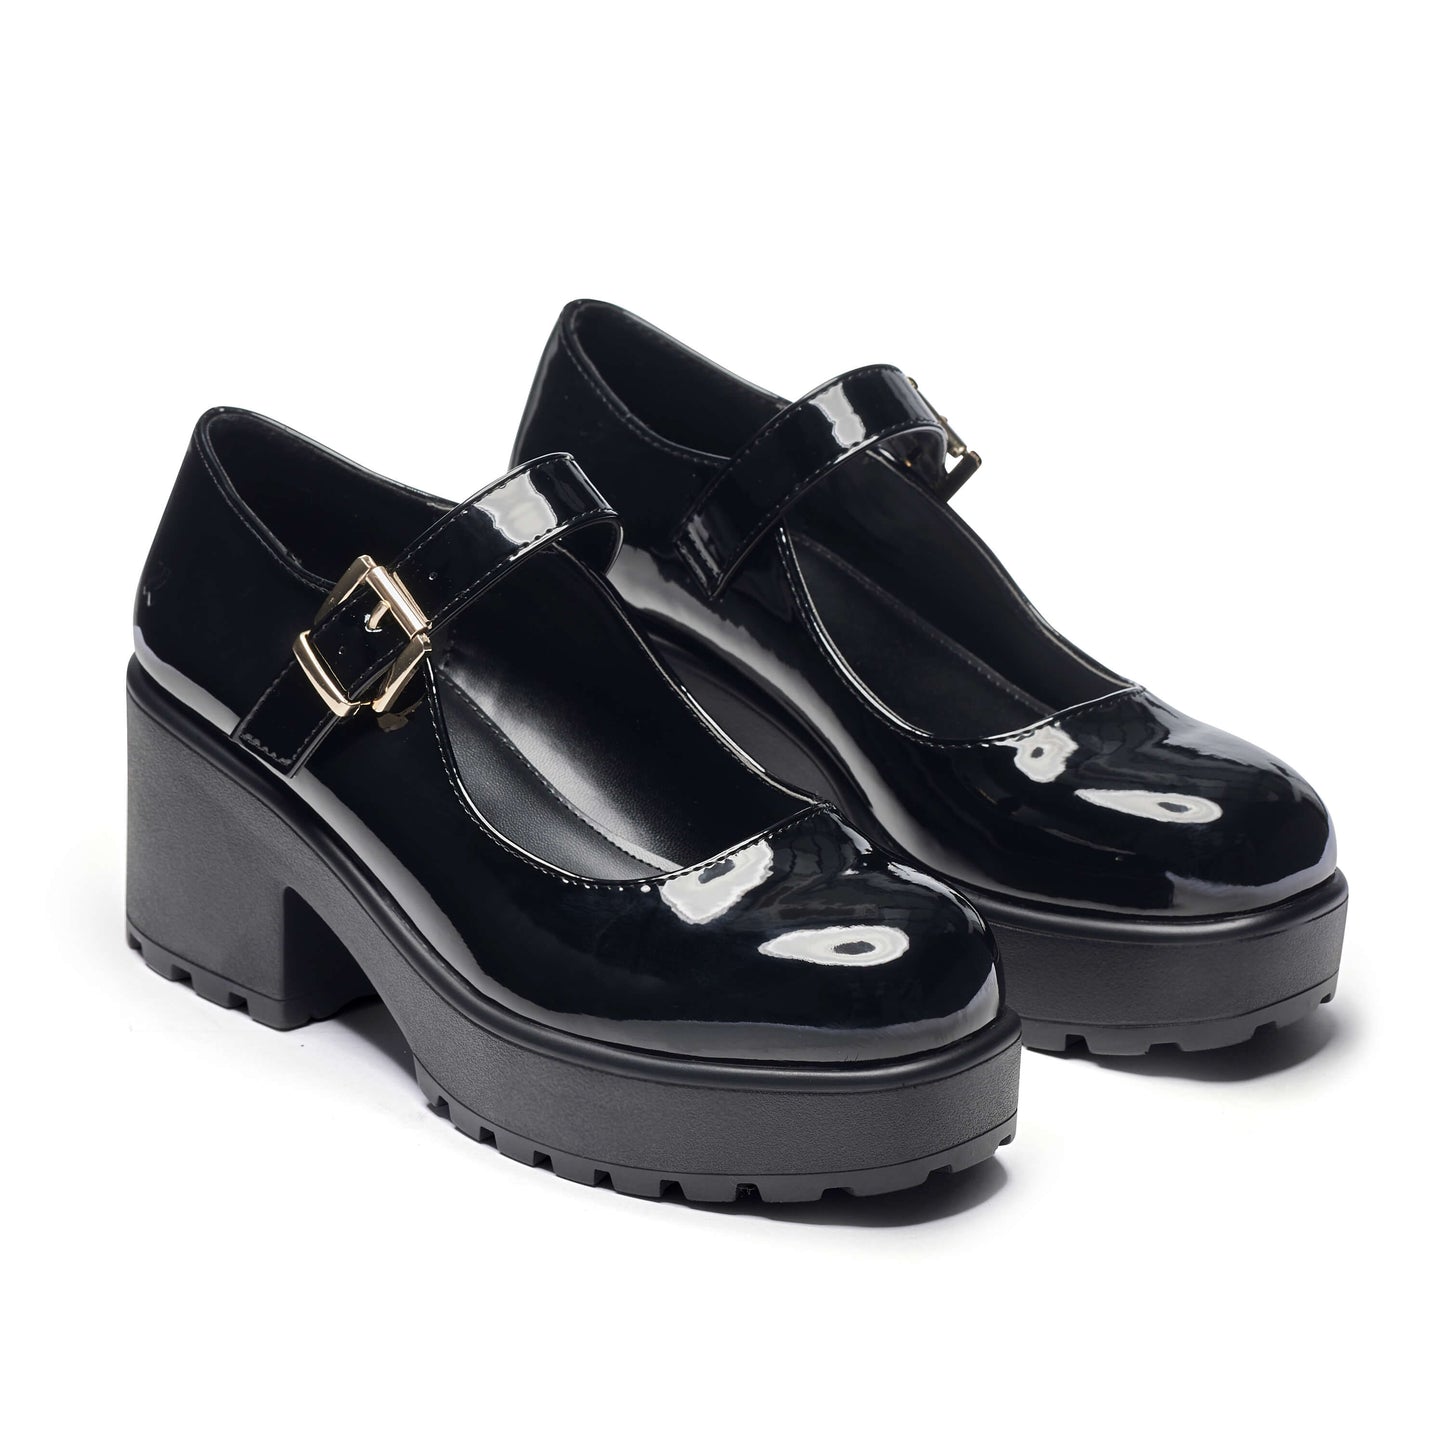 TIRA Black Mary Jane Shoes 'Patent Edition' - Mary Janes - KOI Footwear - Black Patent - Three-Quarter View